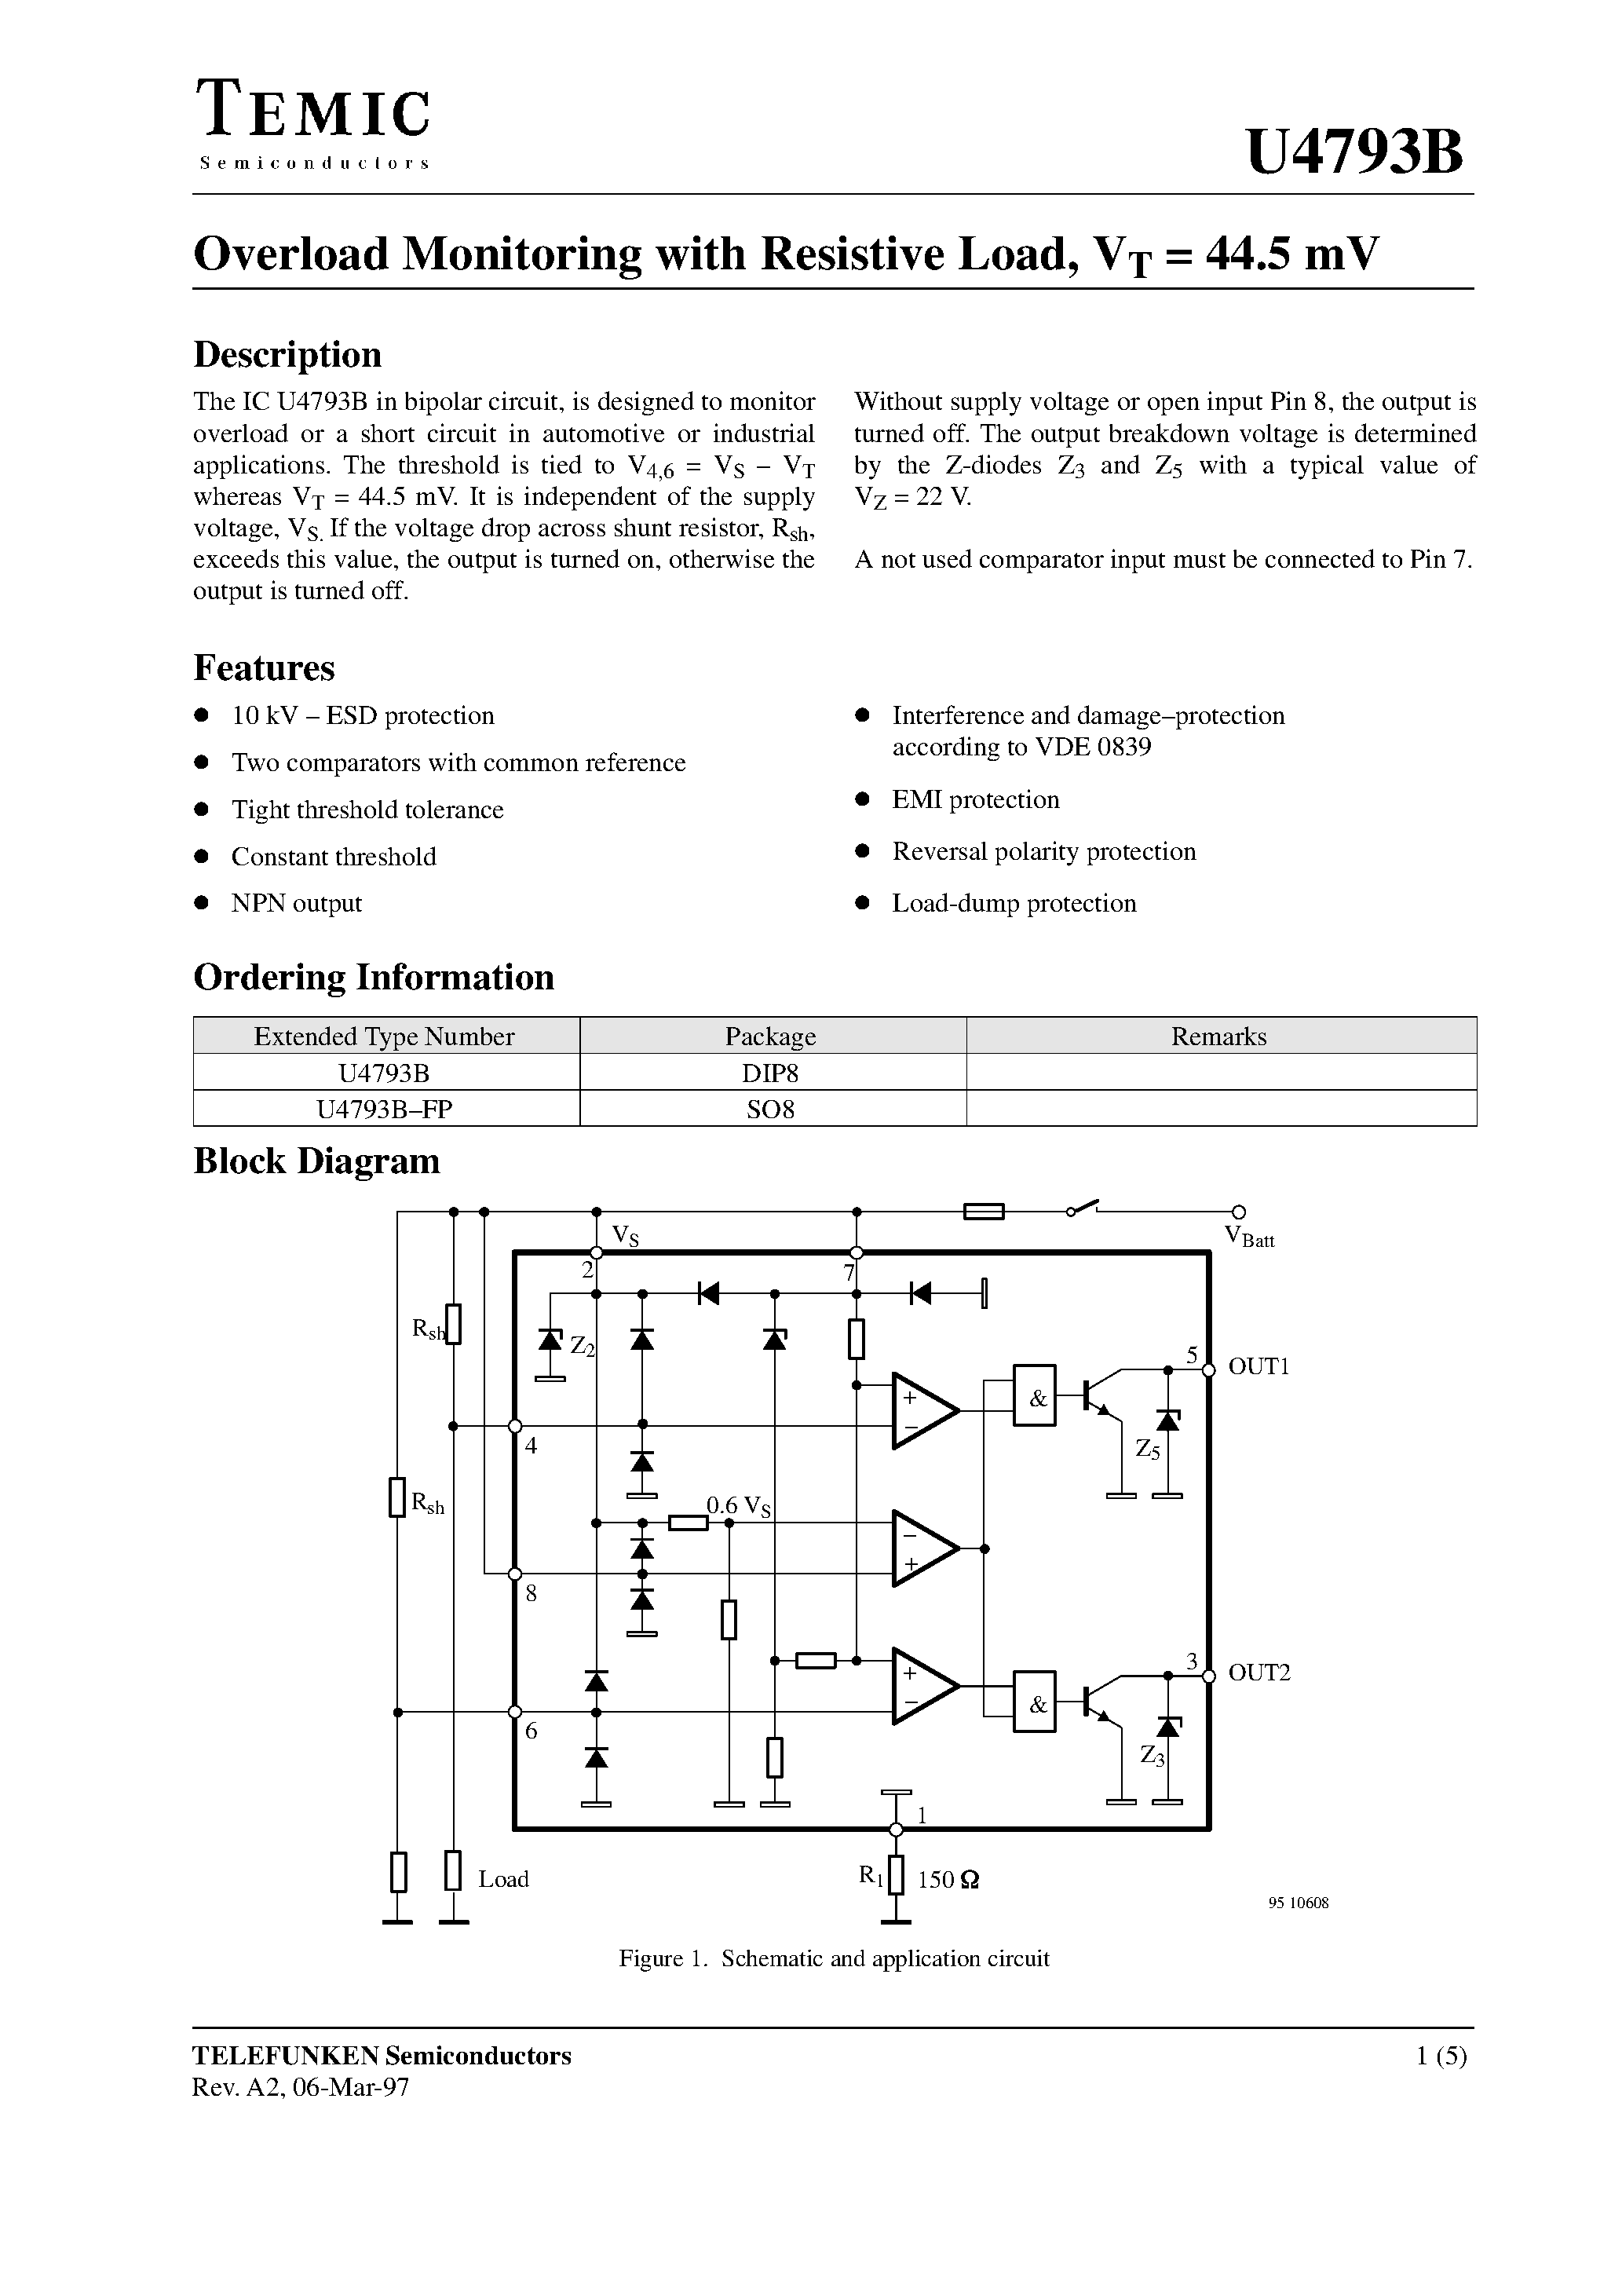 Datasheet U4793B-FP - Overload Monitoring with Resistive Load/ VT = 44.5 mV page 1